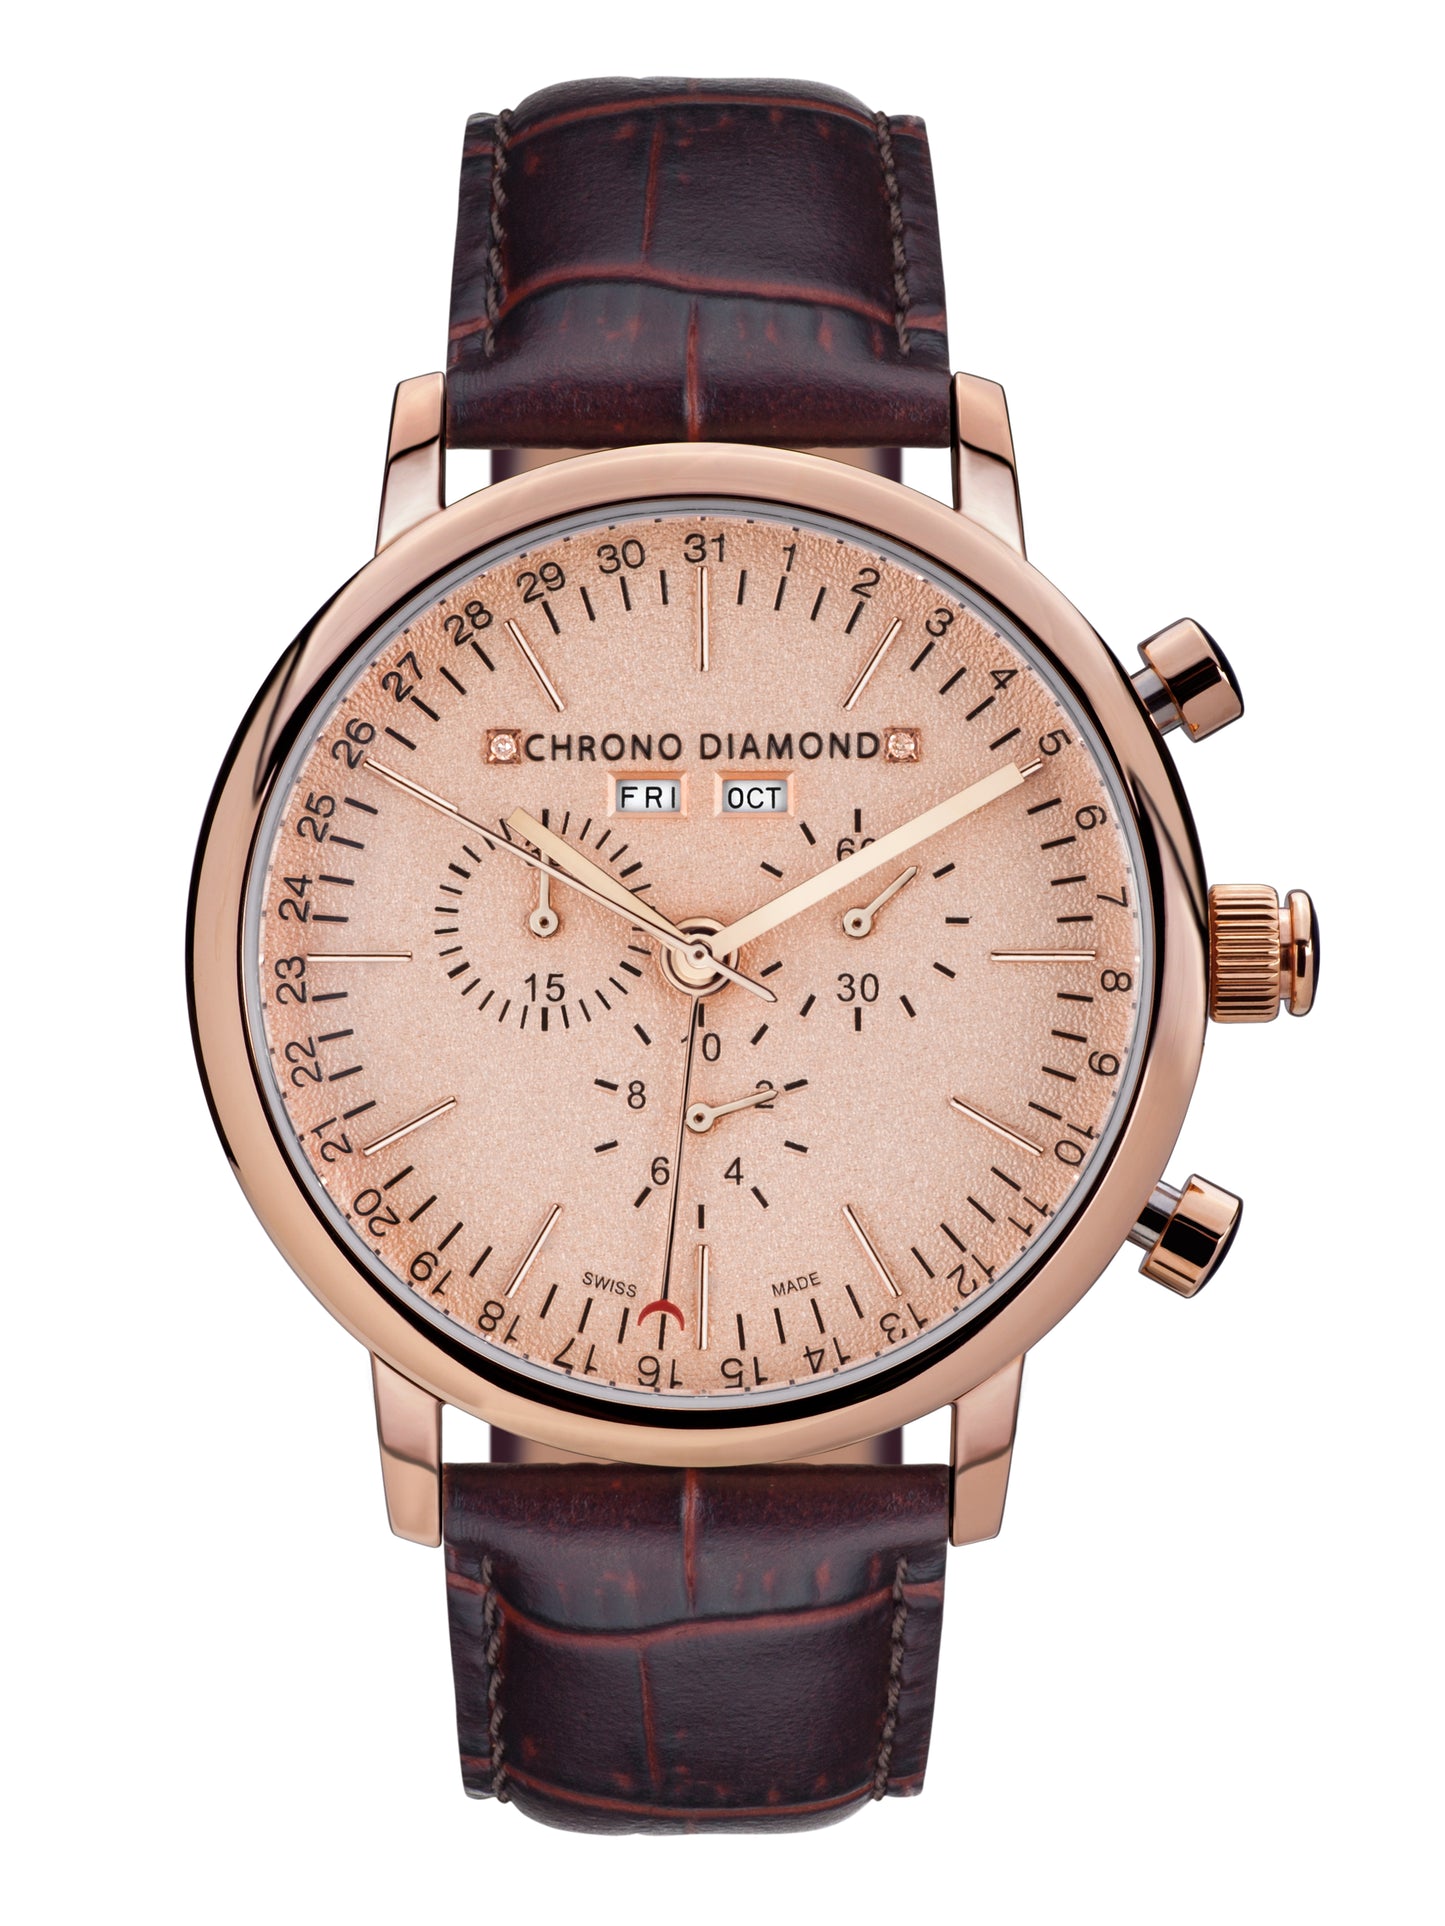 Automatic watches — Argos — Chrono Diamond — rosegold IP rose